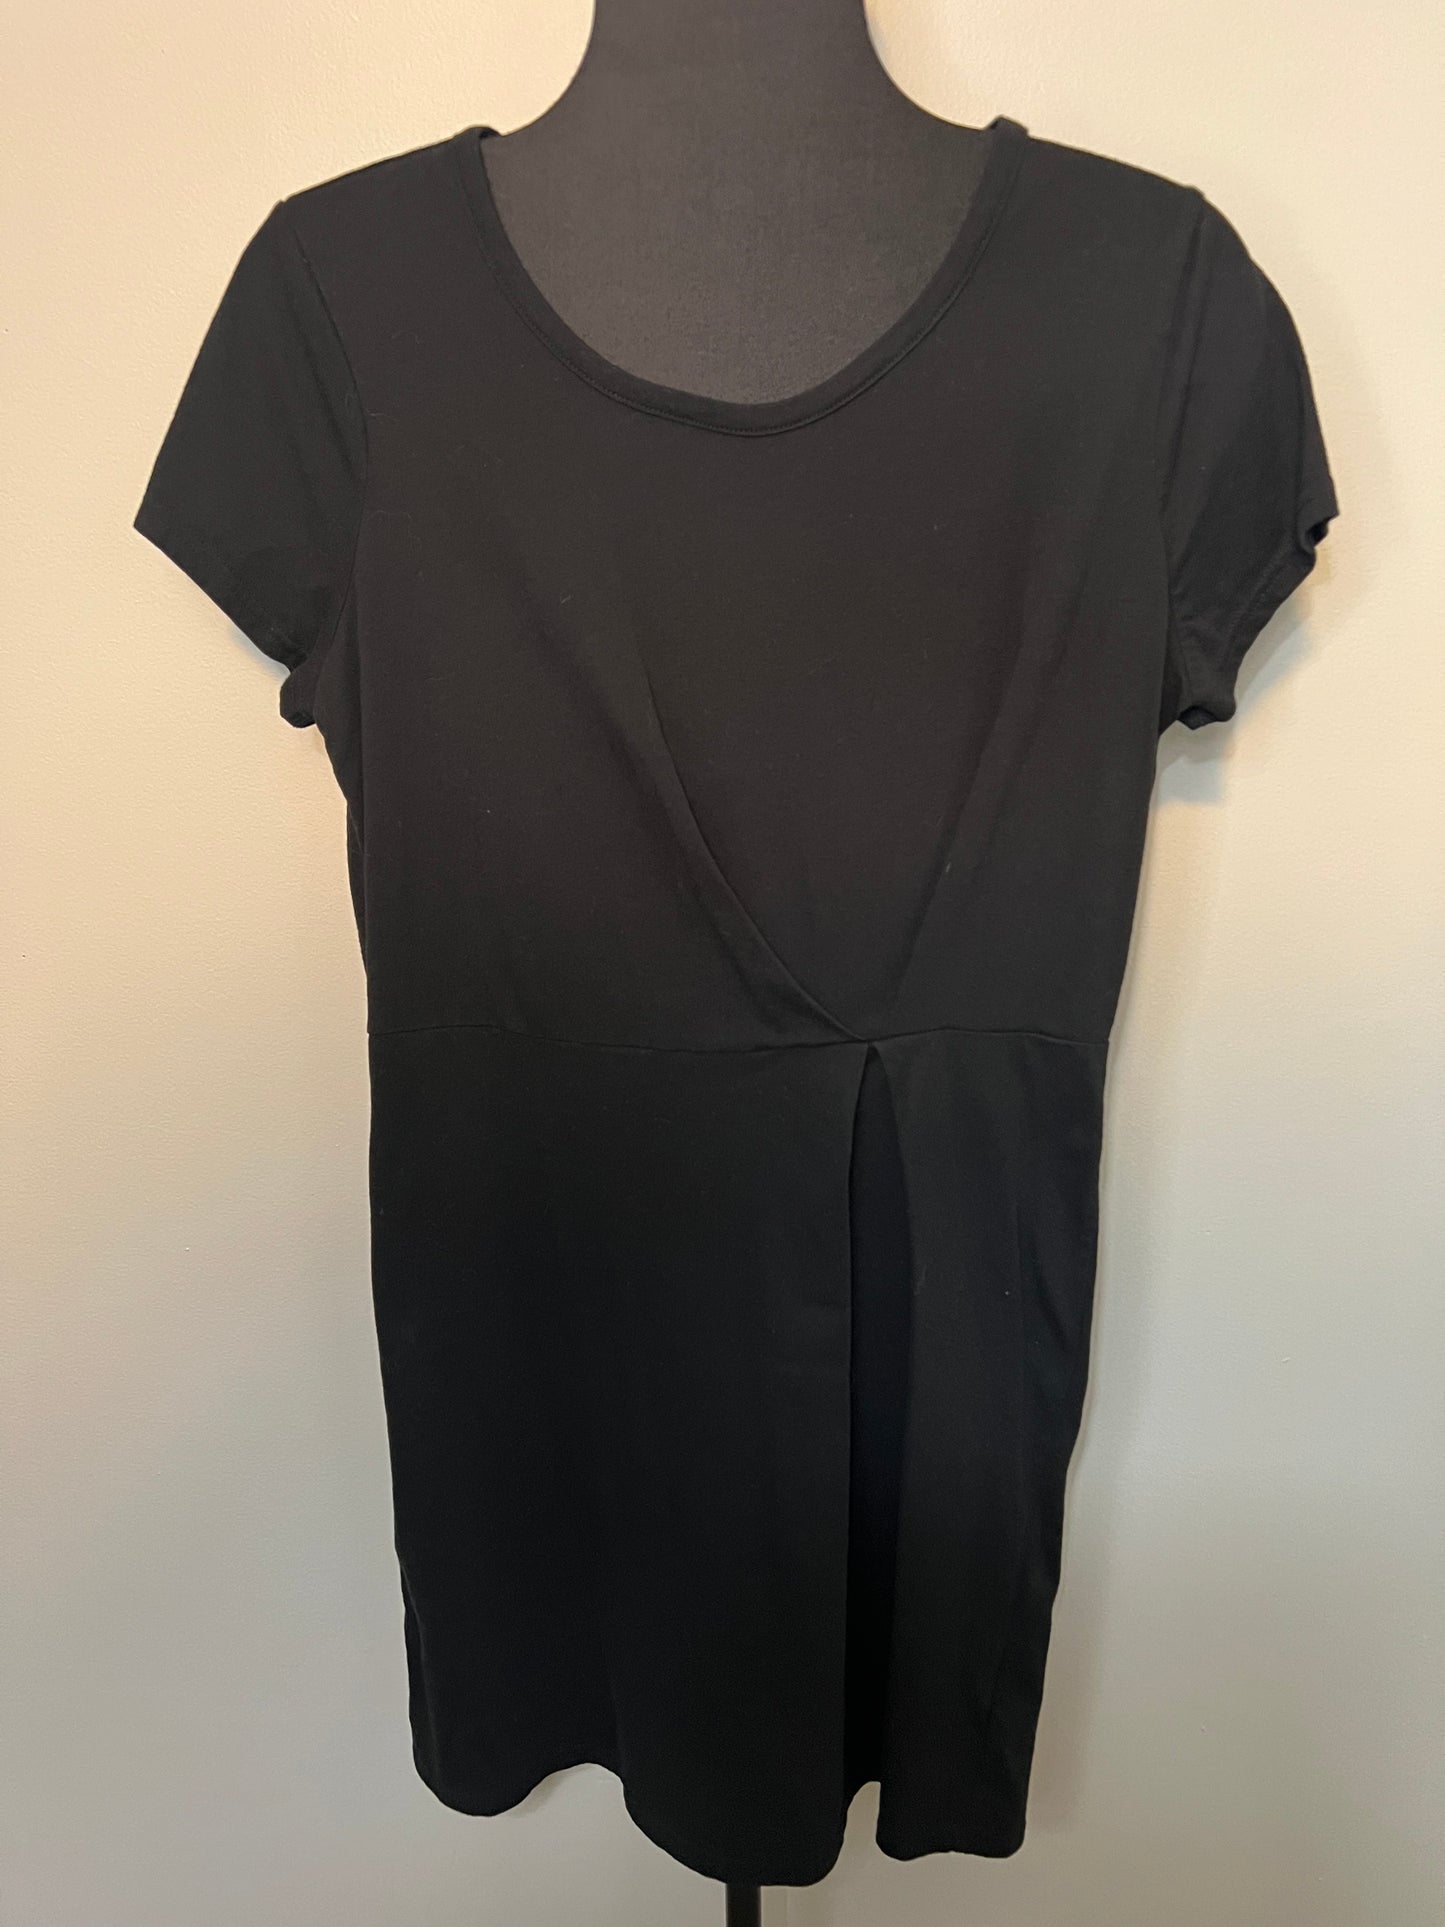 Women’s Medium Black Dress - GUC